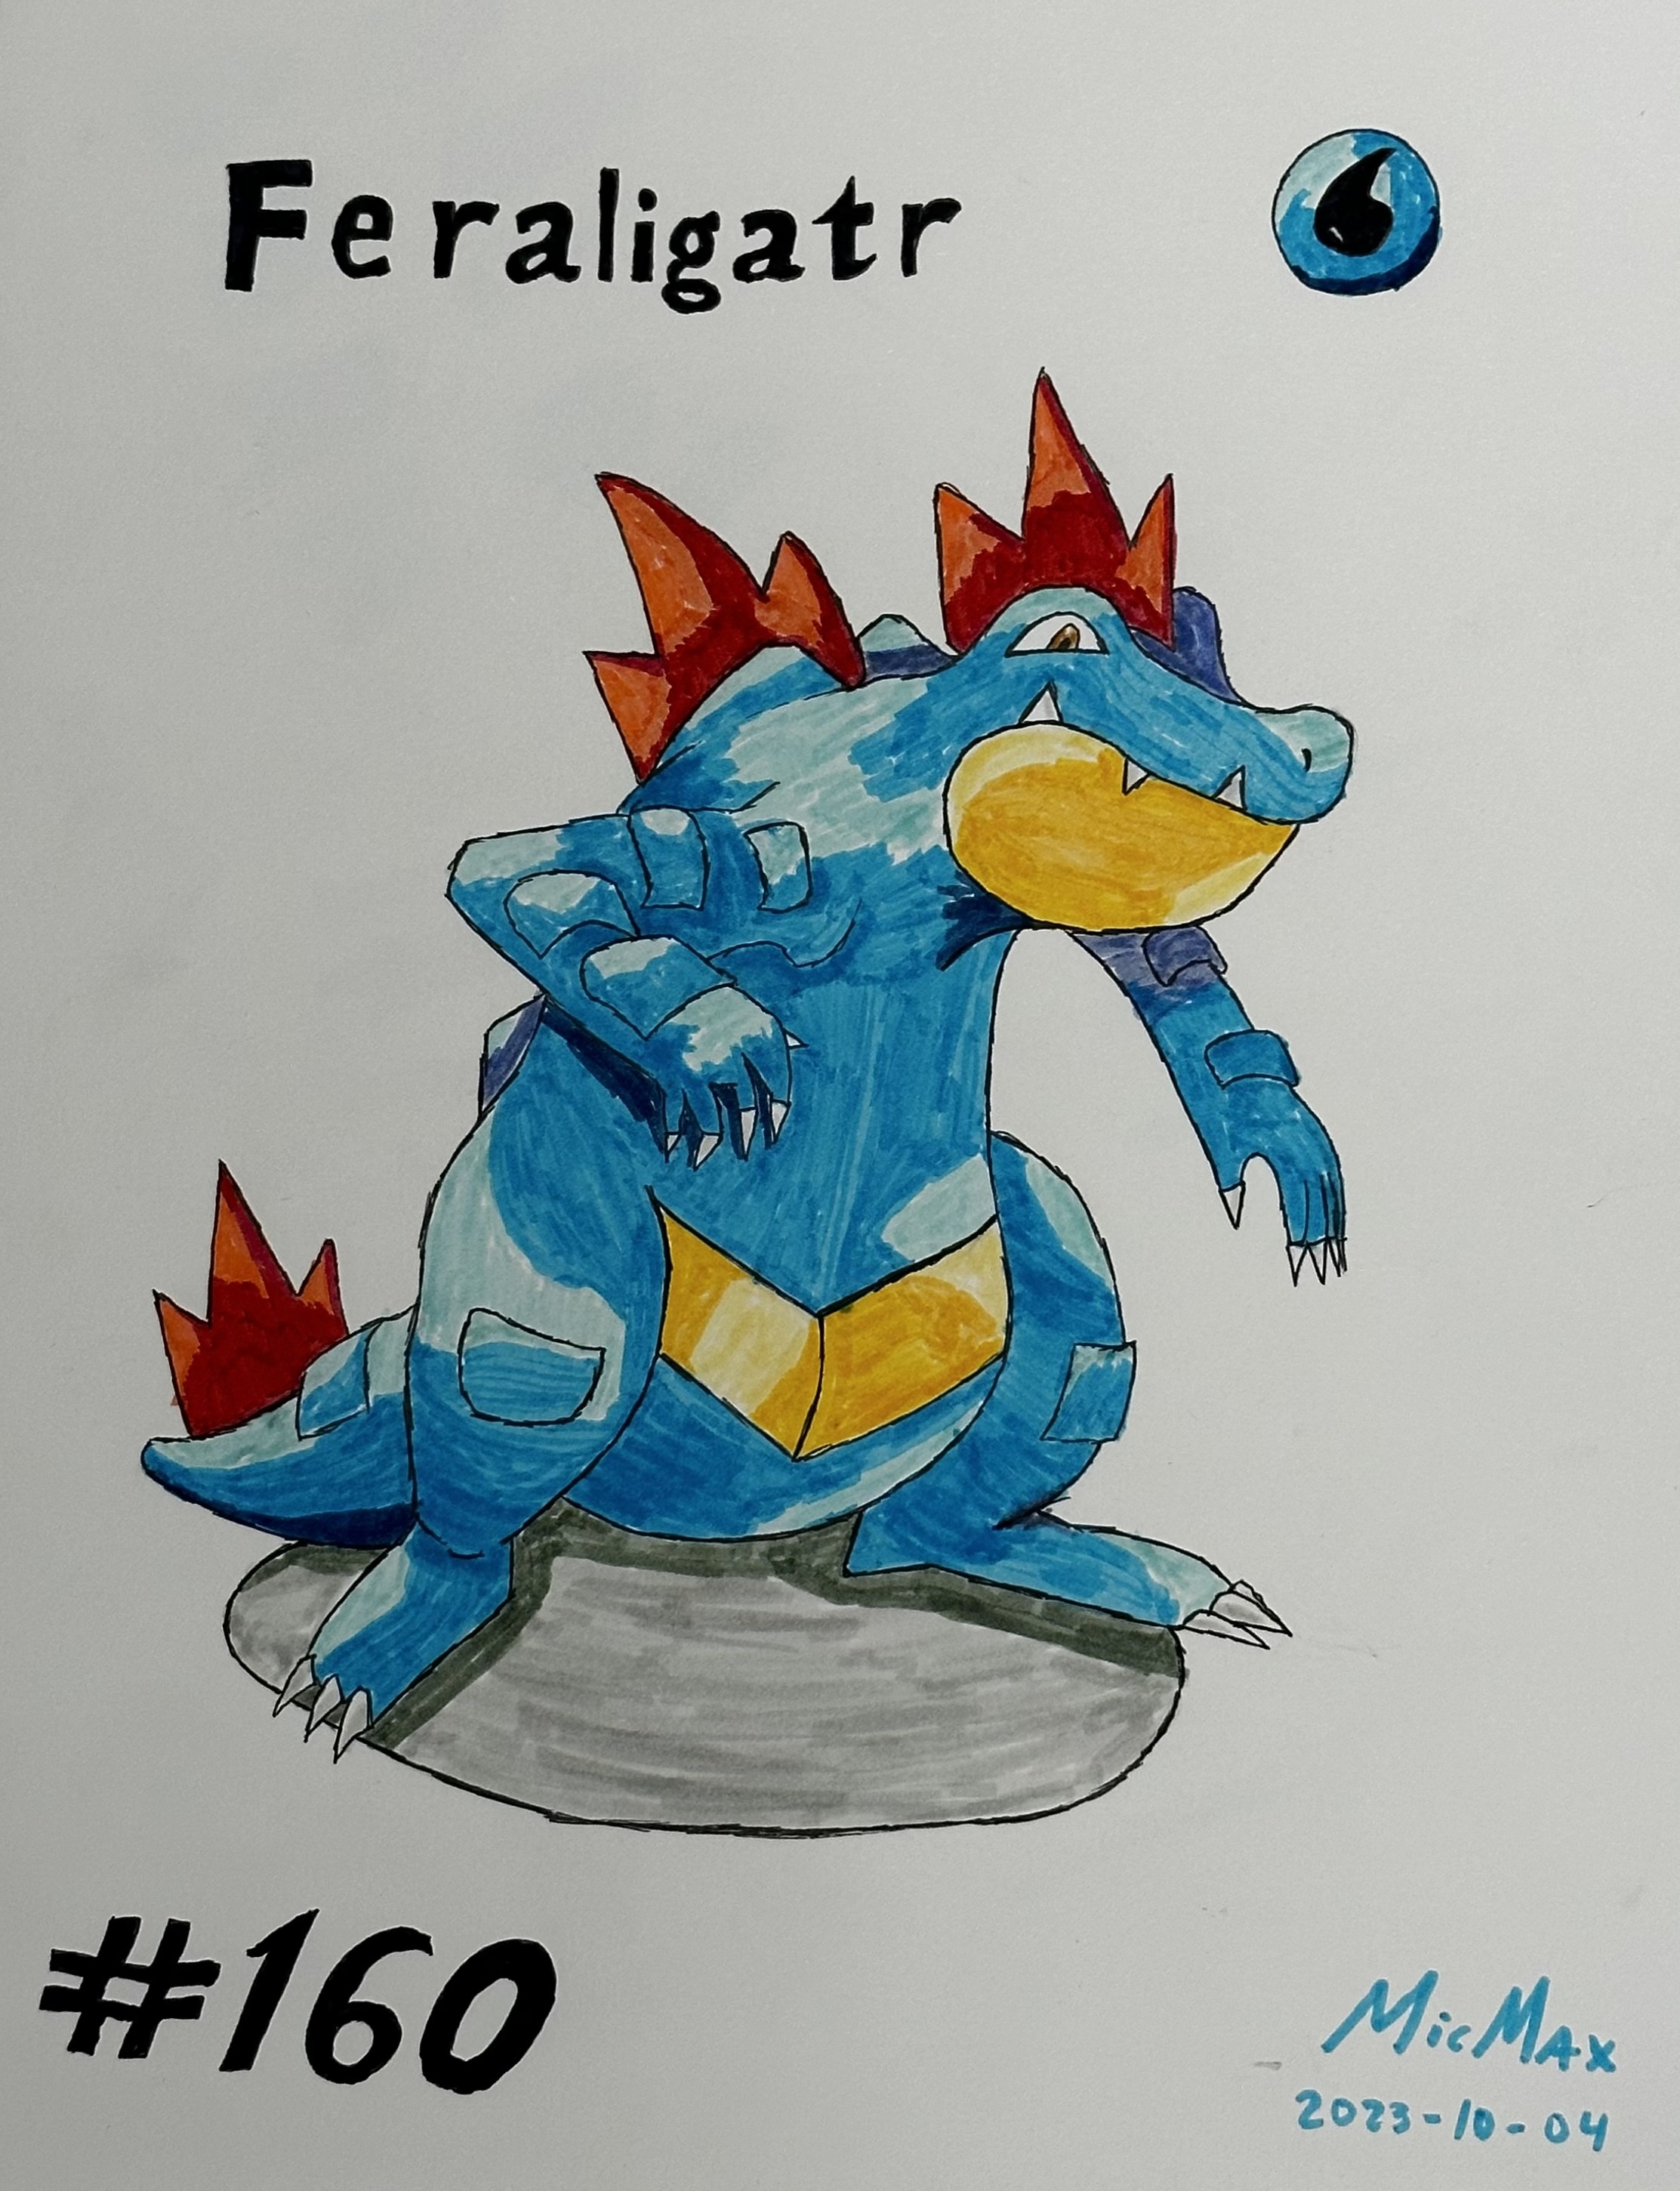 The Pokemon Feraligatr